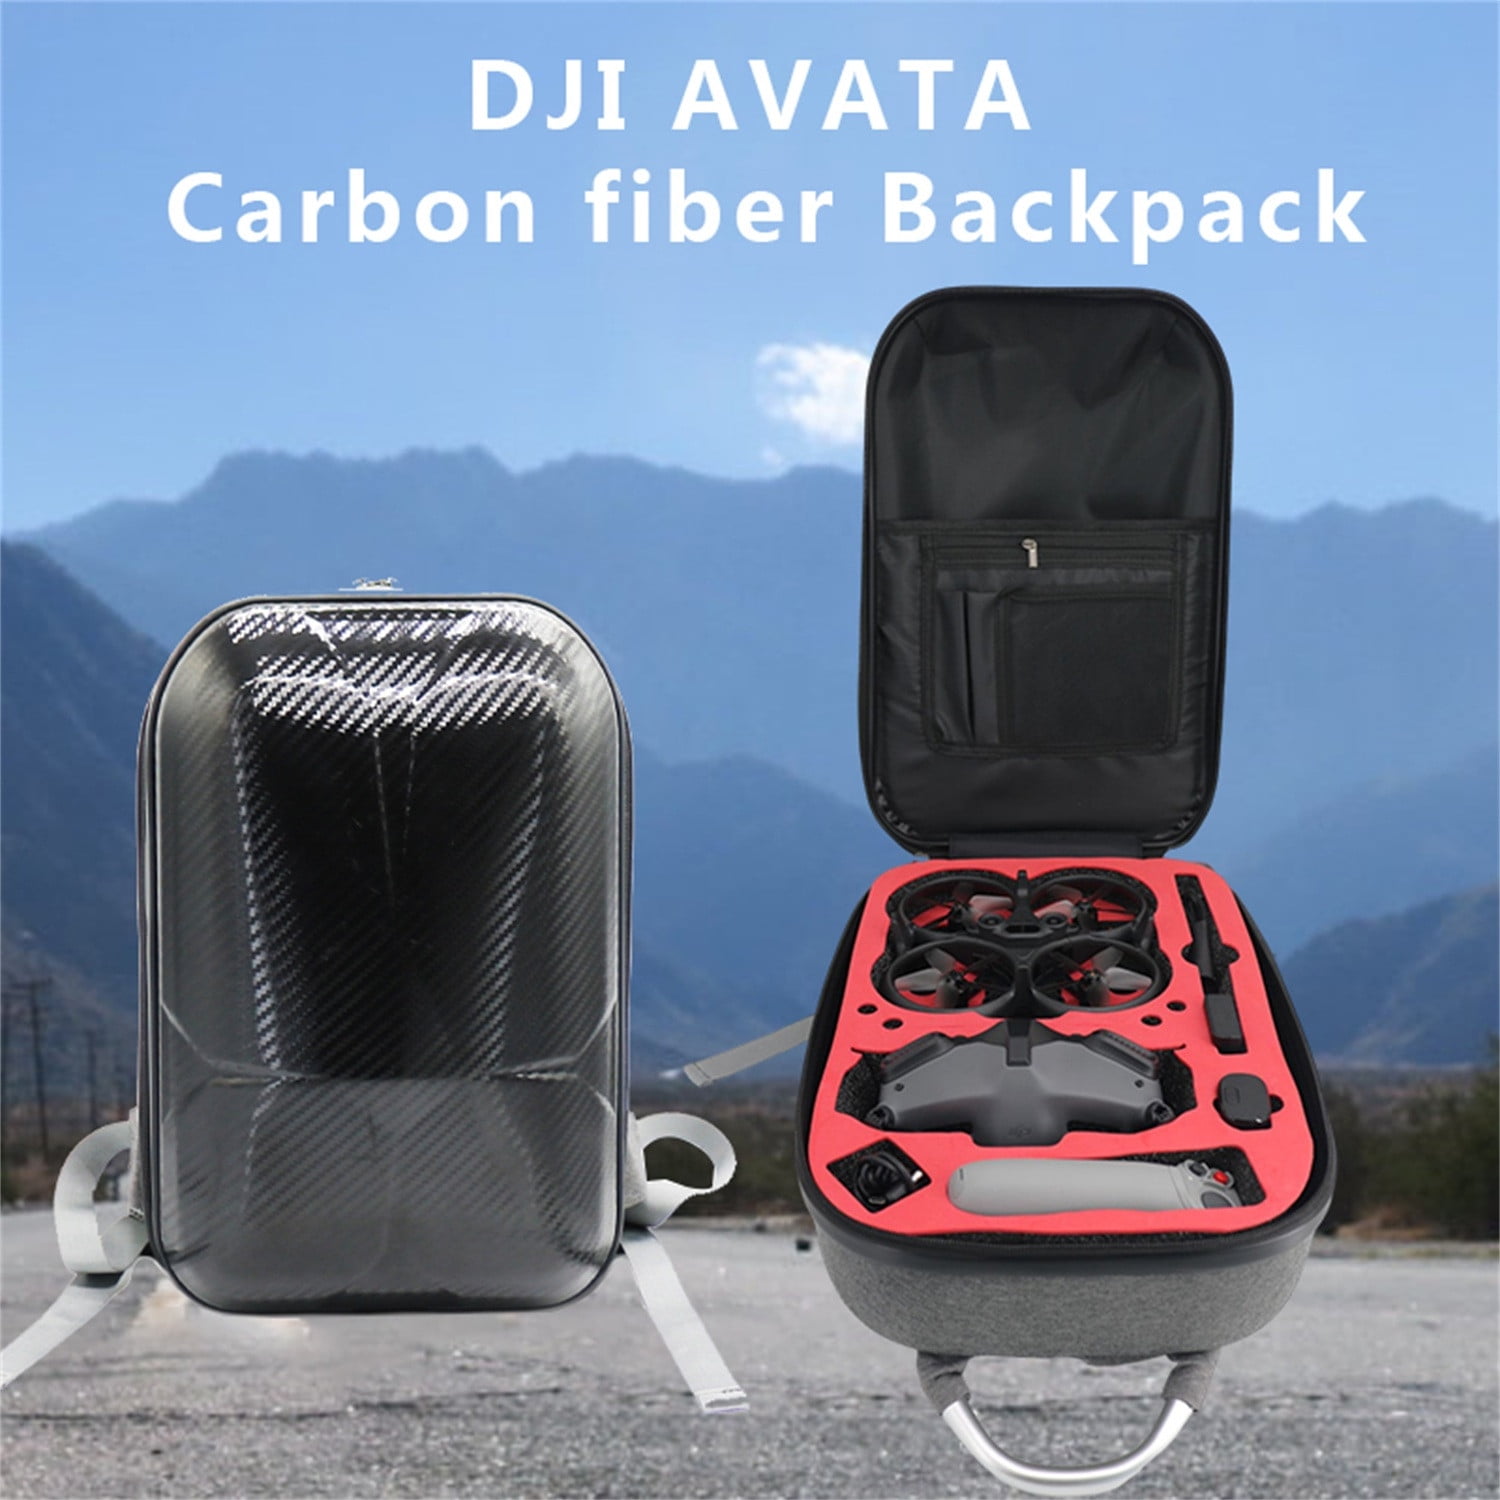 Carbon Fiber Hard Shell Storage Bag For DJI Avata Drone - Walmart.com